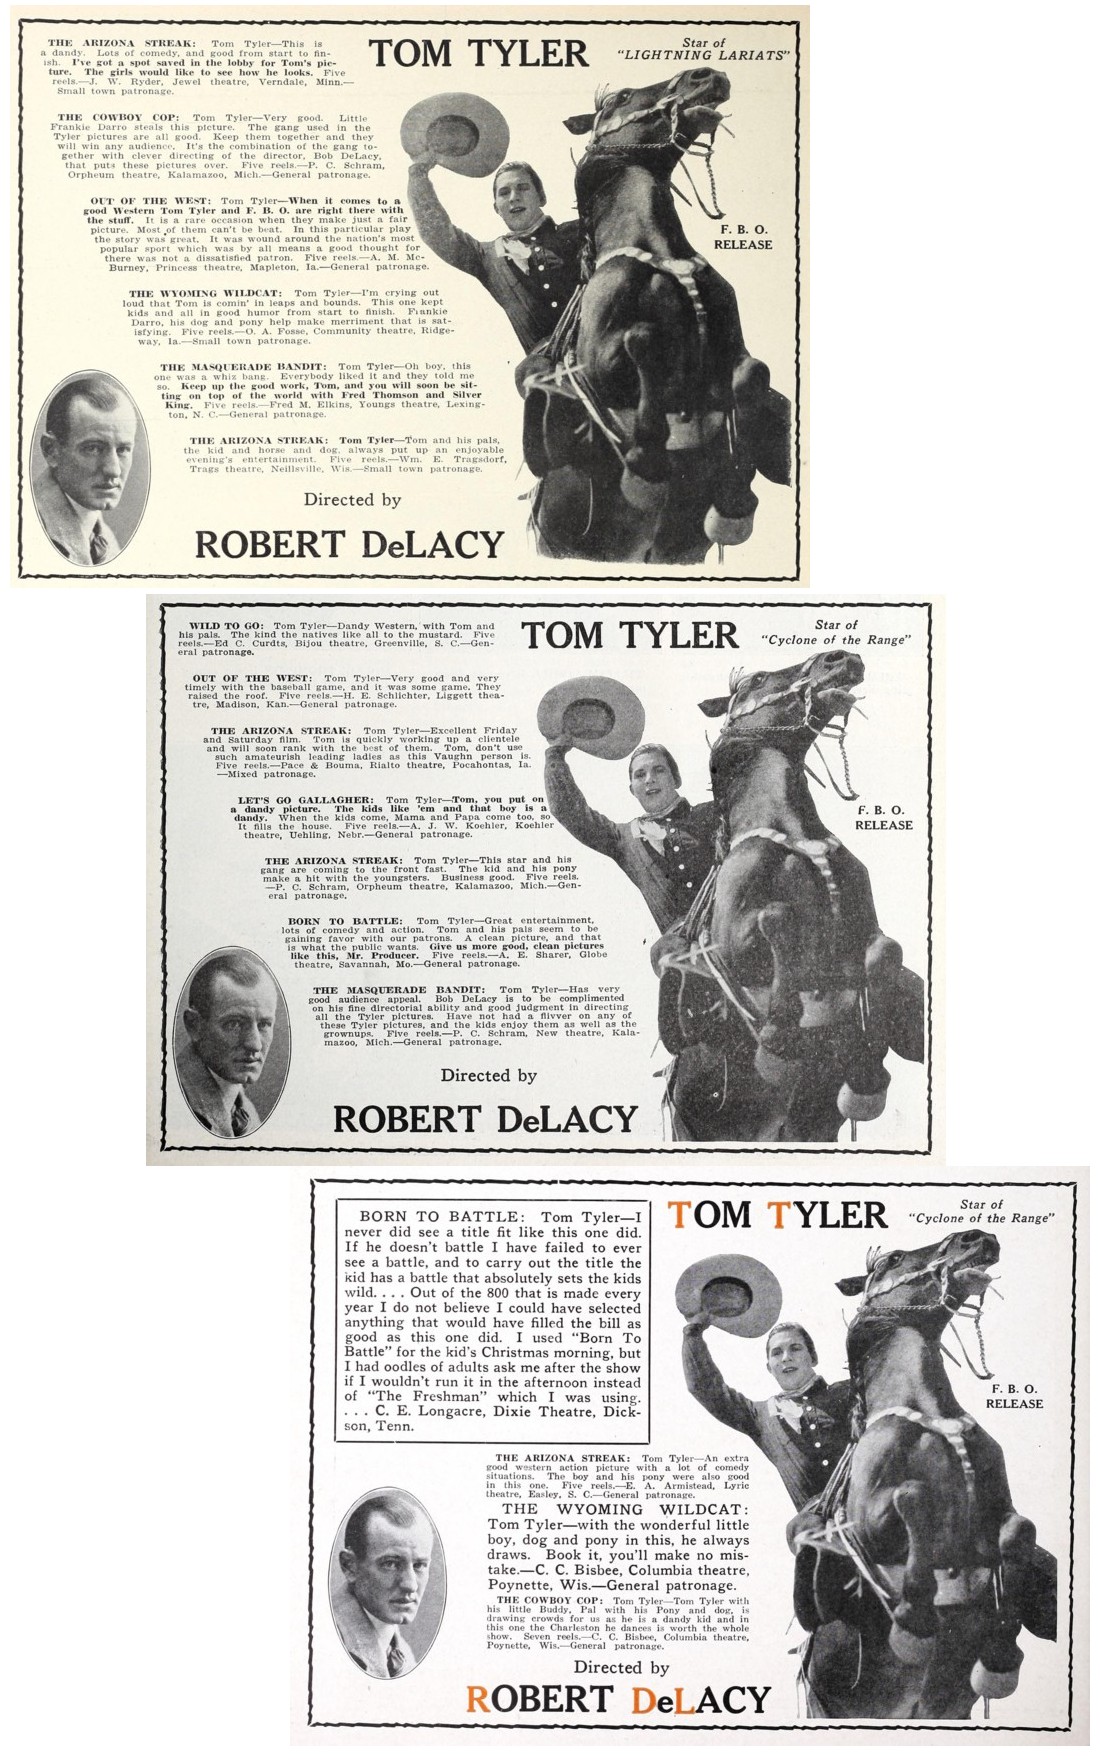 Exhibitor's Herald 1926 to 1927 film praise for Tom Tyler